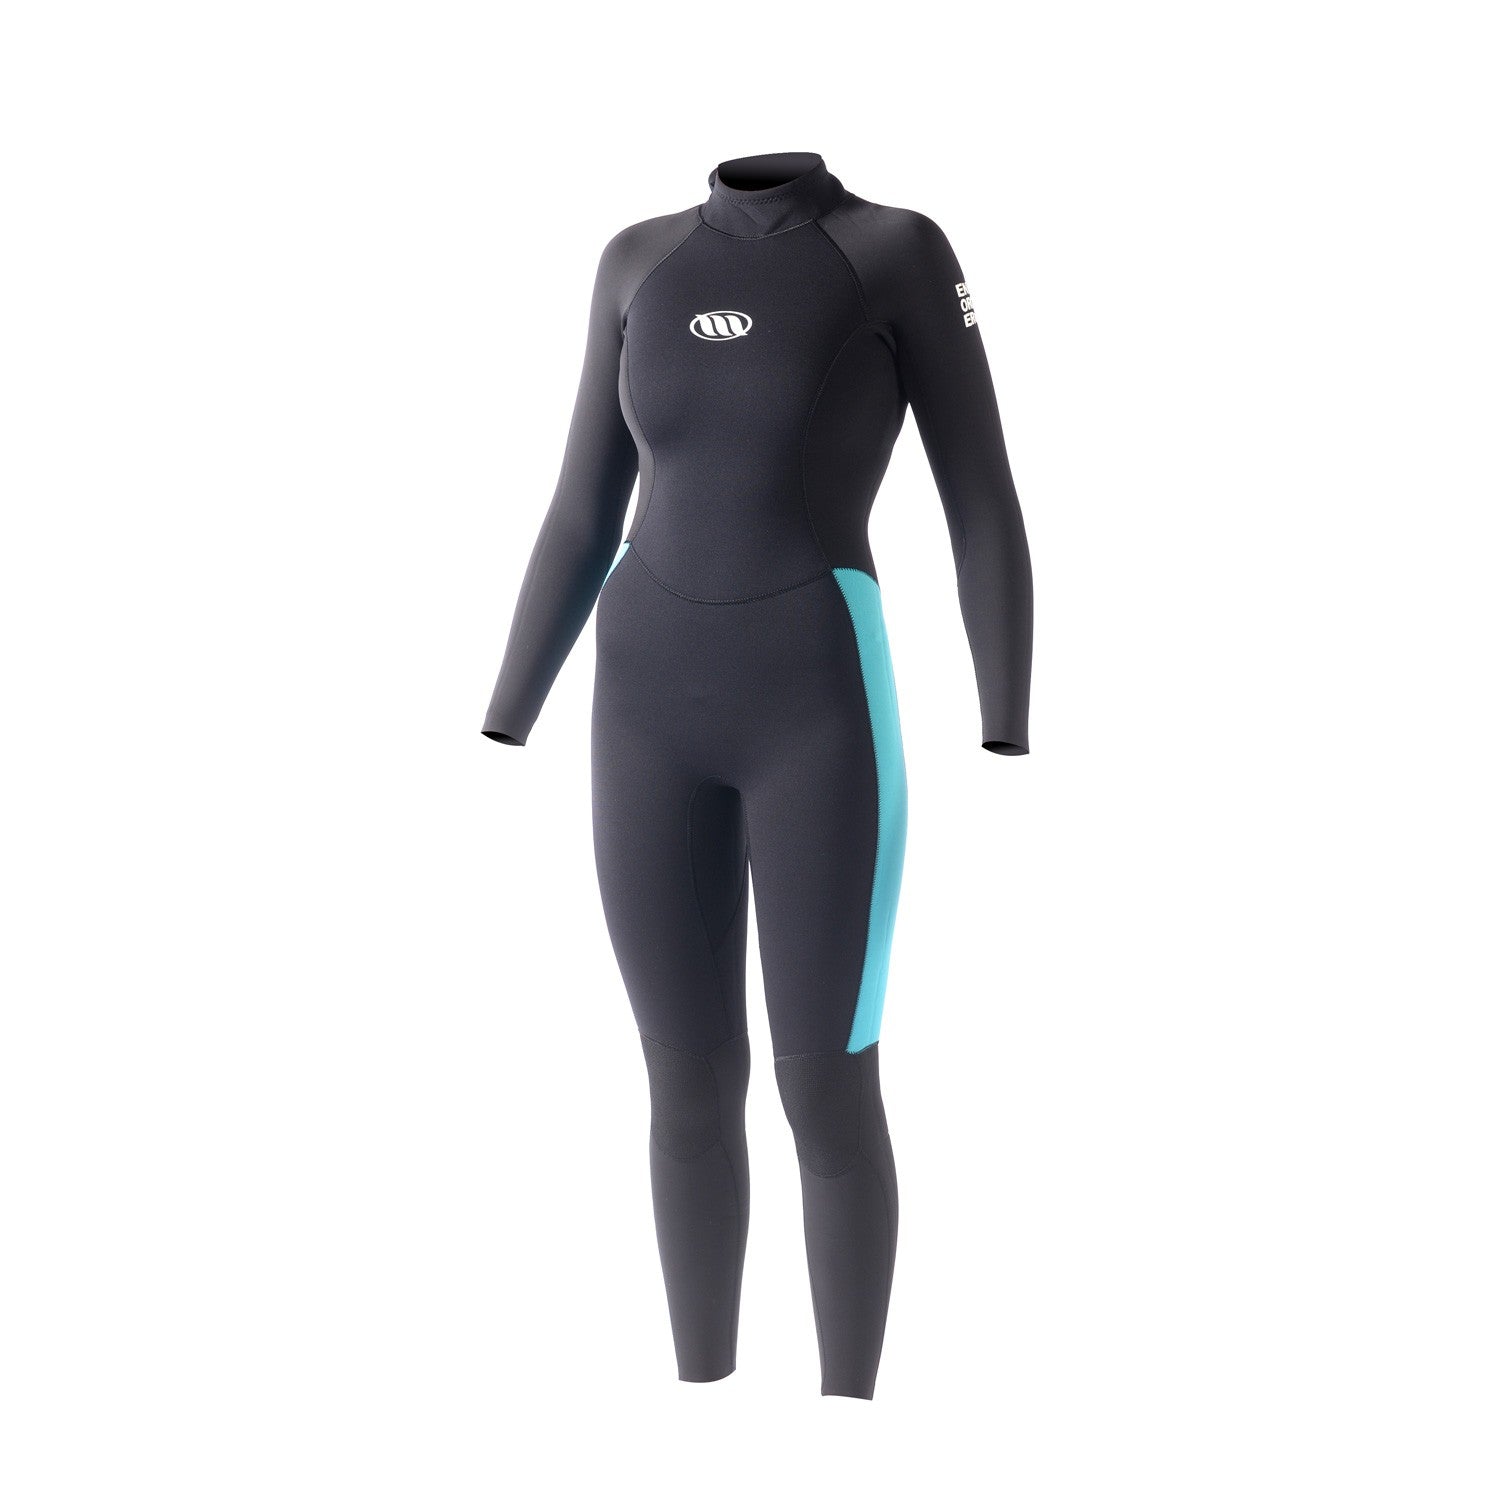 WEST - Women's surf wetsuit - Enforcer Lady 3/2mm back zip - Black / Blue